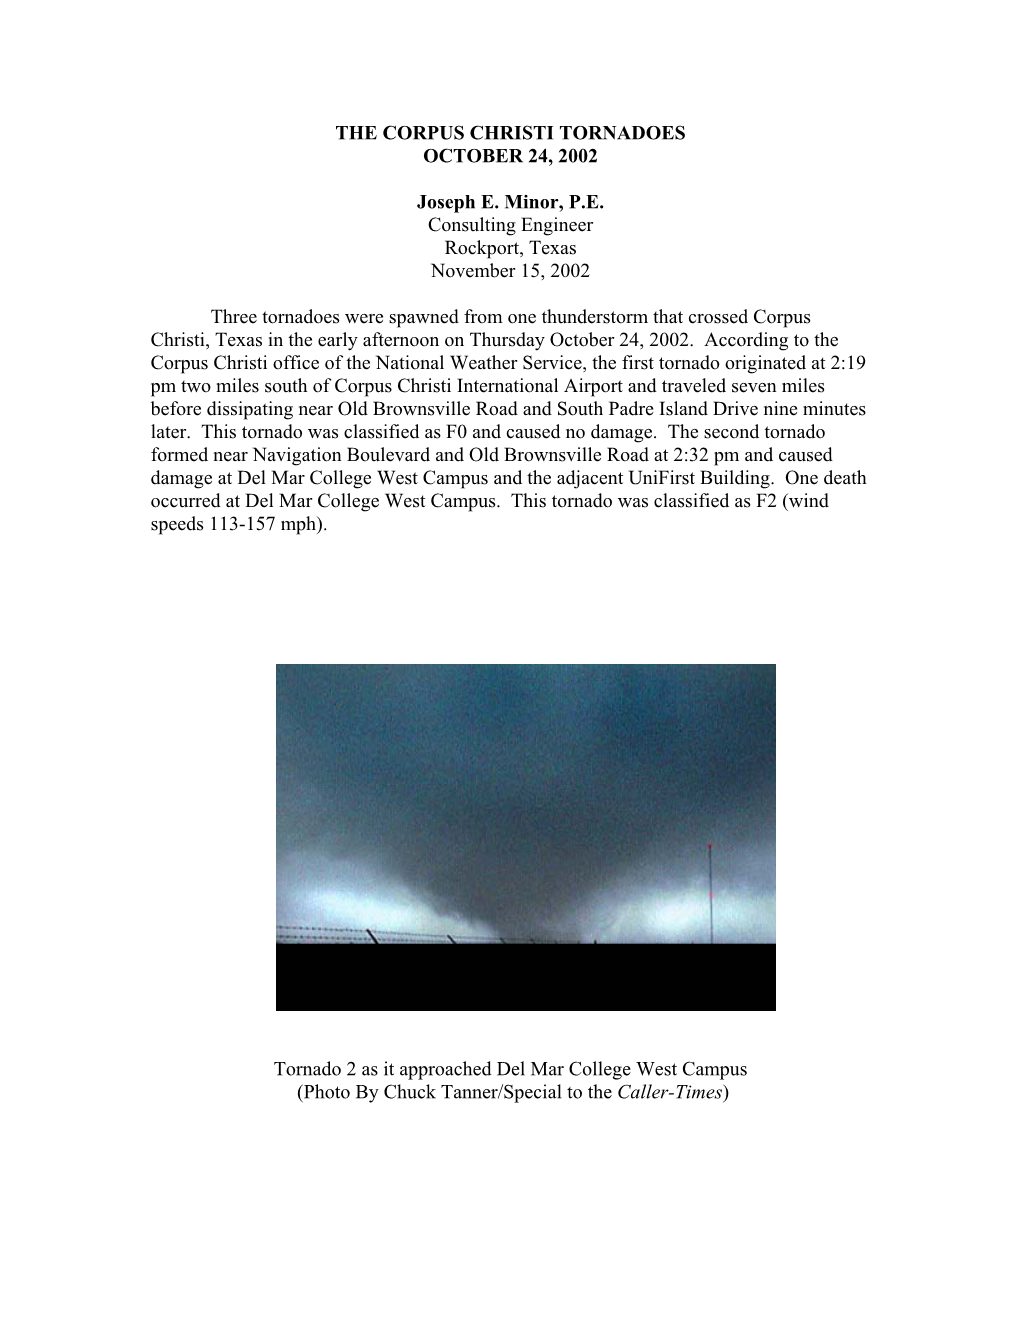 The Corpus Christi Tornadoes October 24, 2002